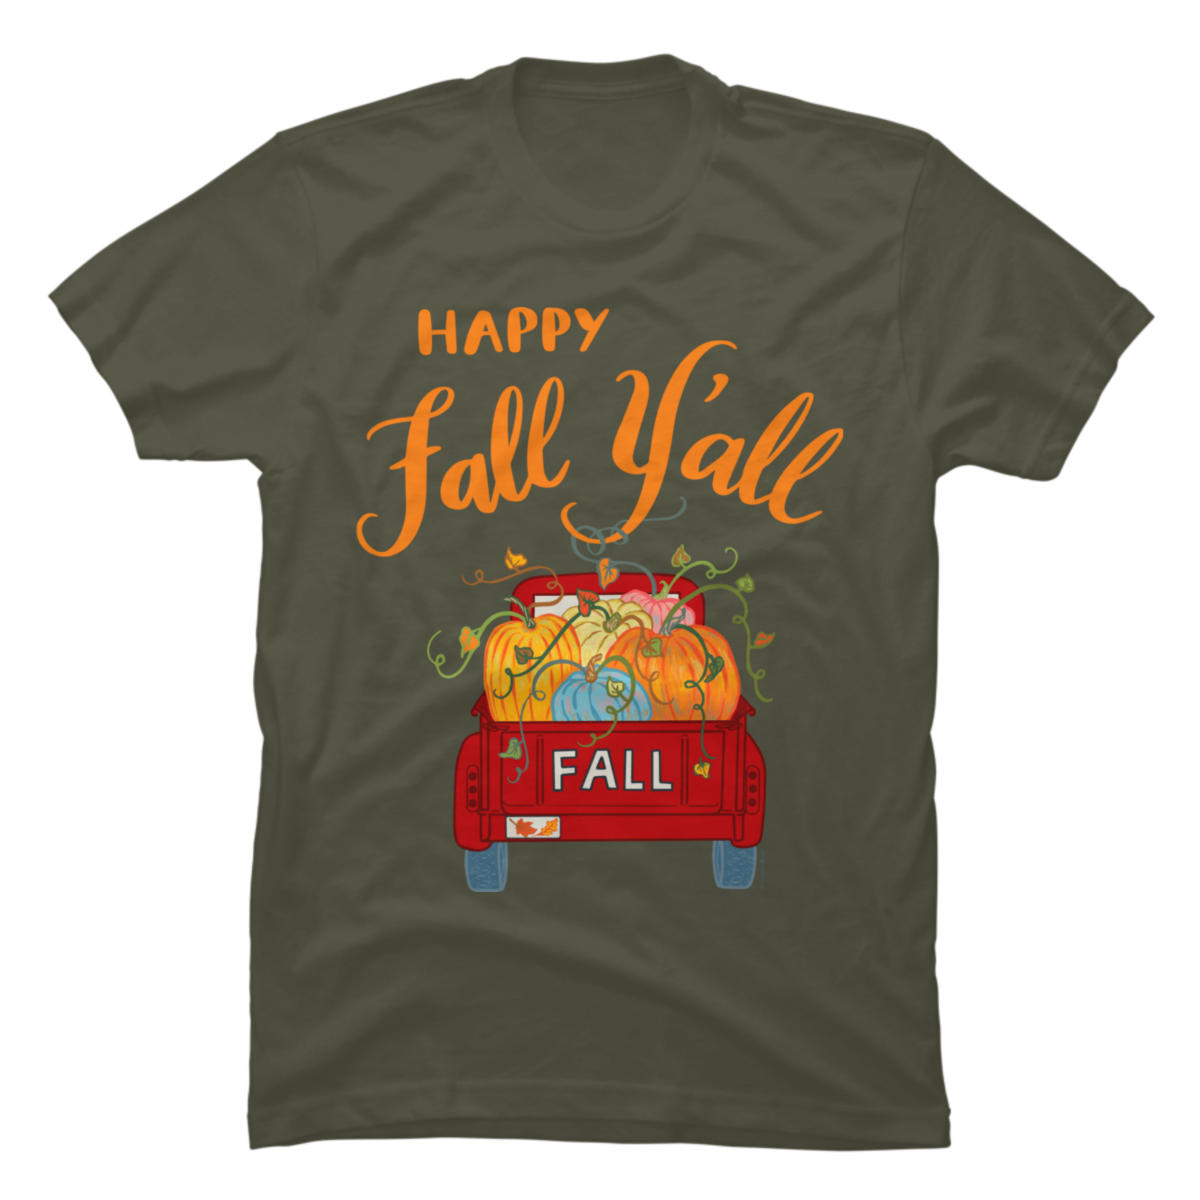 happy fall yall shirts